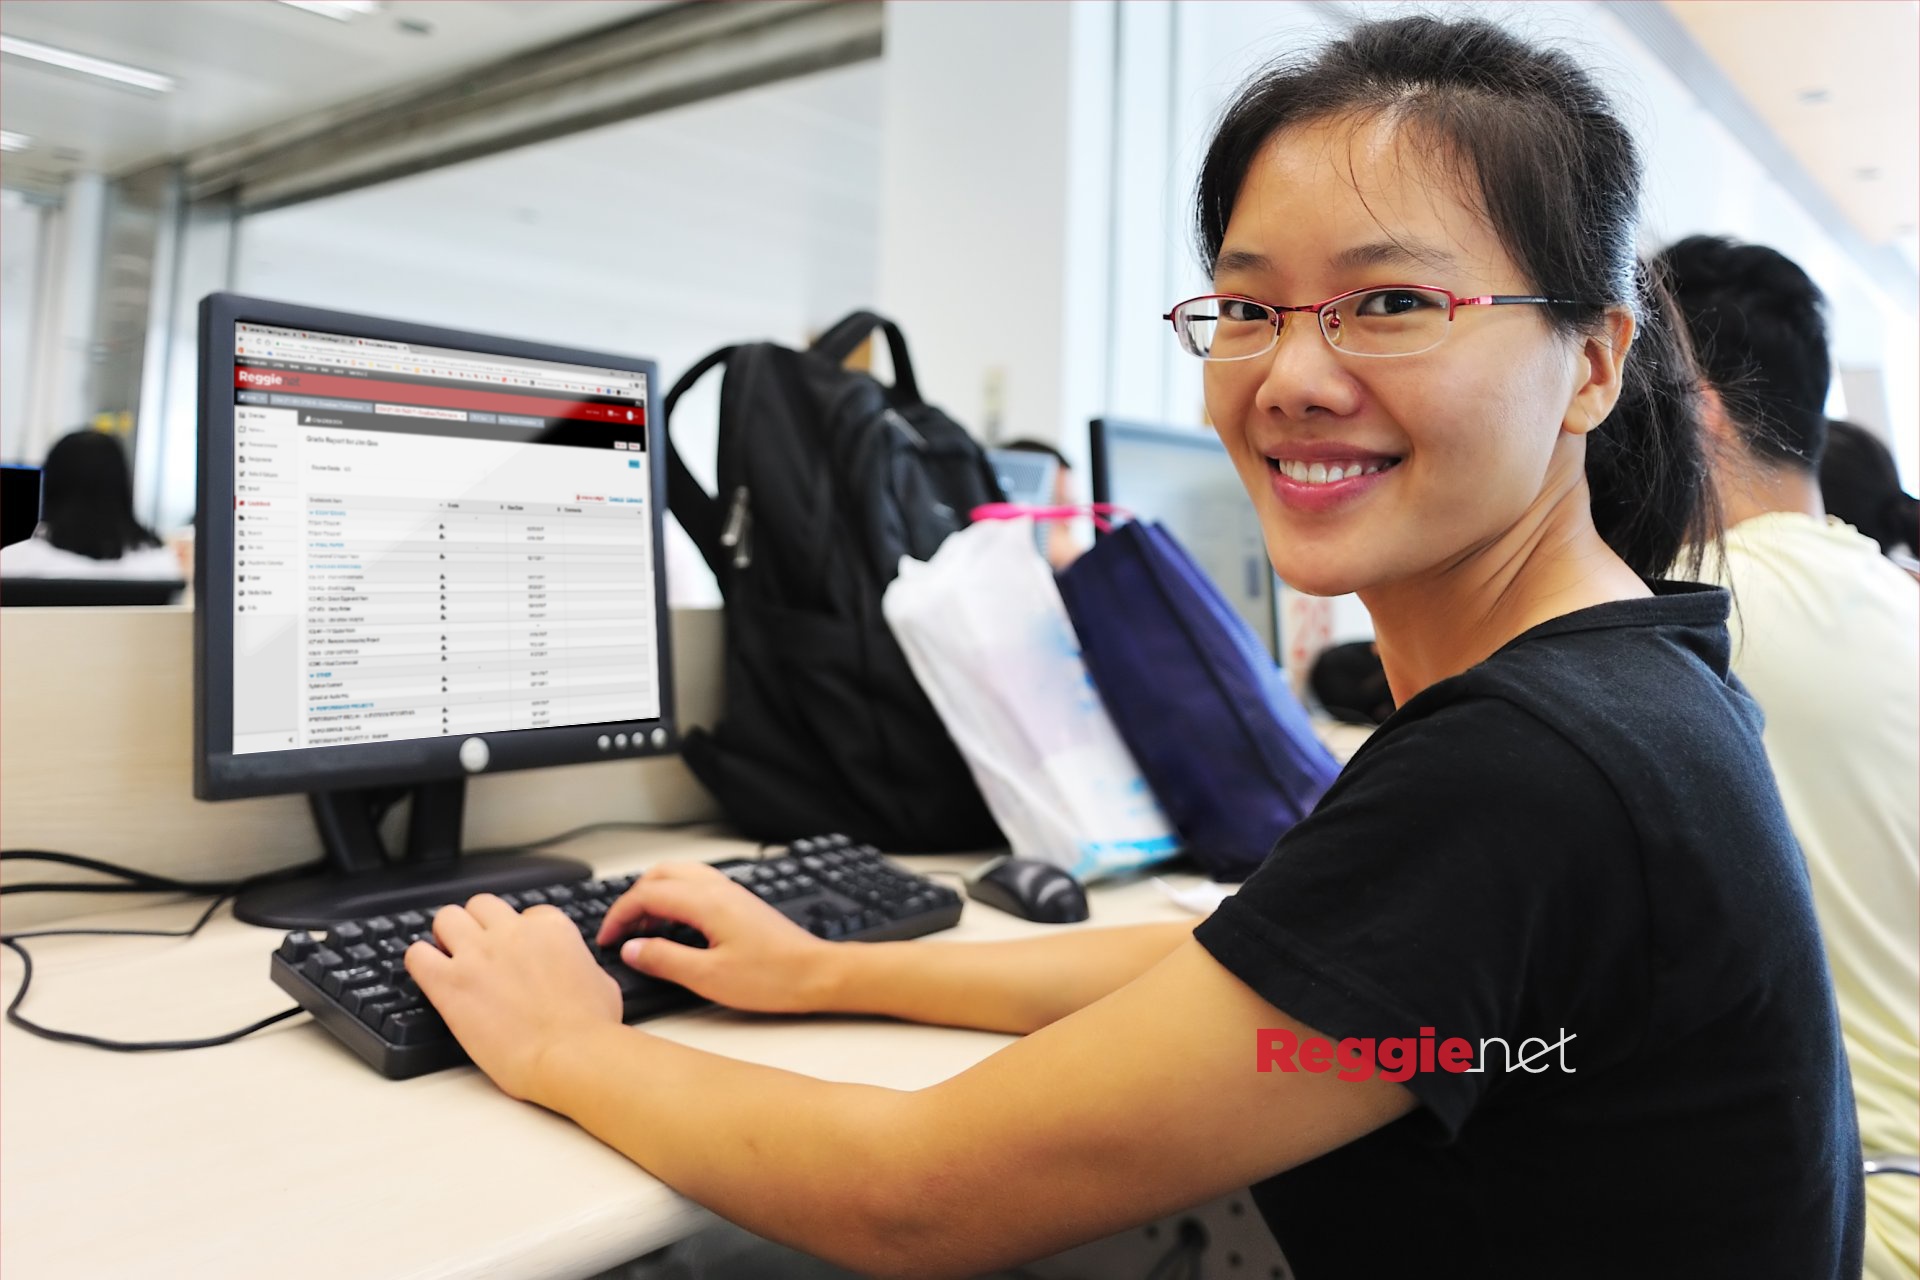 Student smiling, ReggieNet on computer screen